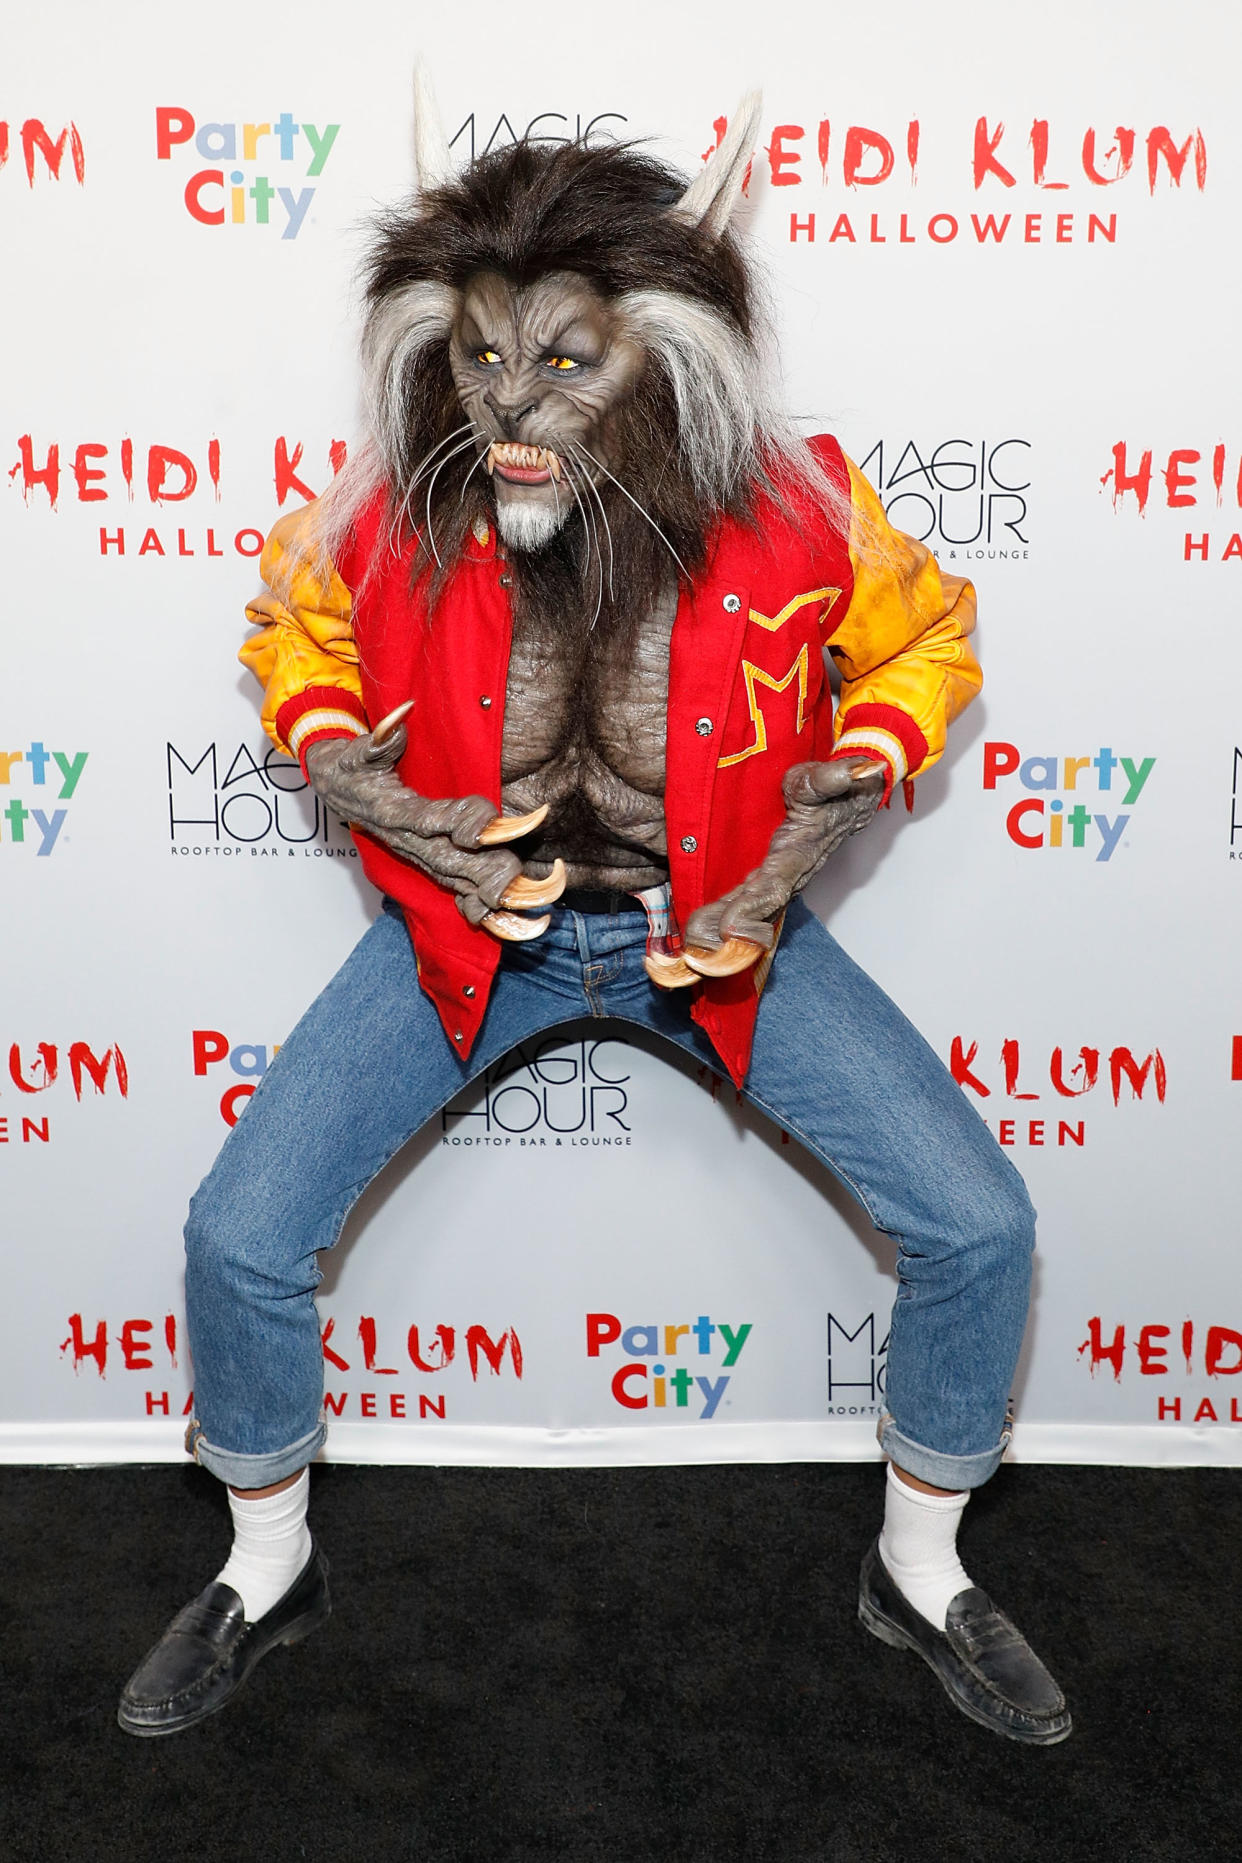 Heidi Klum en personaje de Hombre Lobo del video de Michael Jackson, “Thriller”.